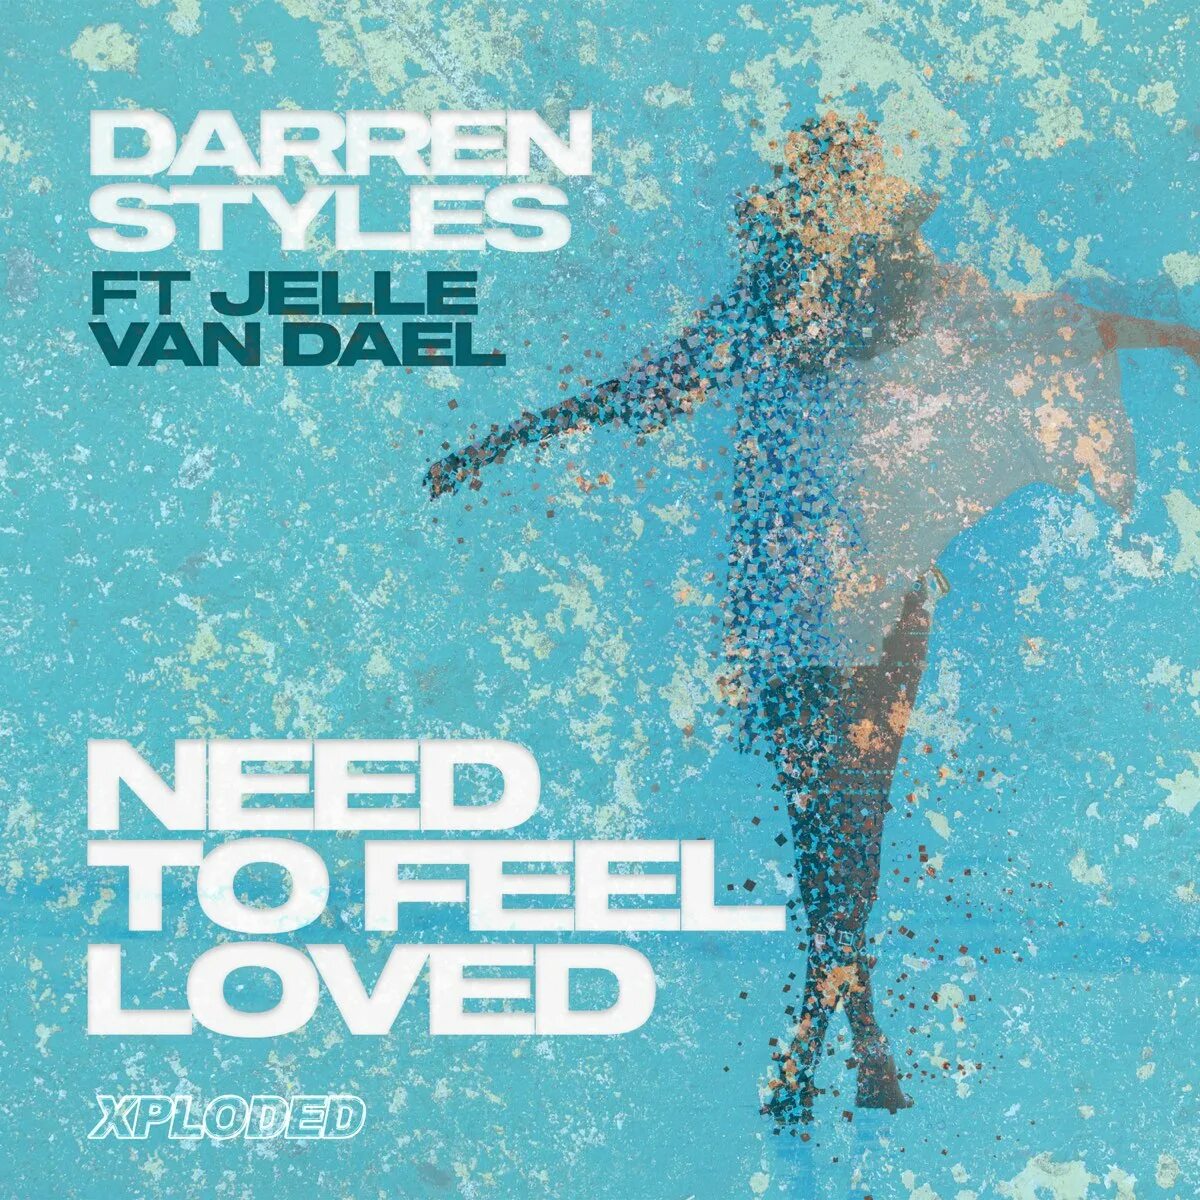 Need to feel Loved. Darren Styles,Jelle van Dael - need to feel Loved. Album Art need to feel Loved need to feel Loved Delline Bass.